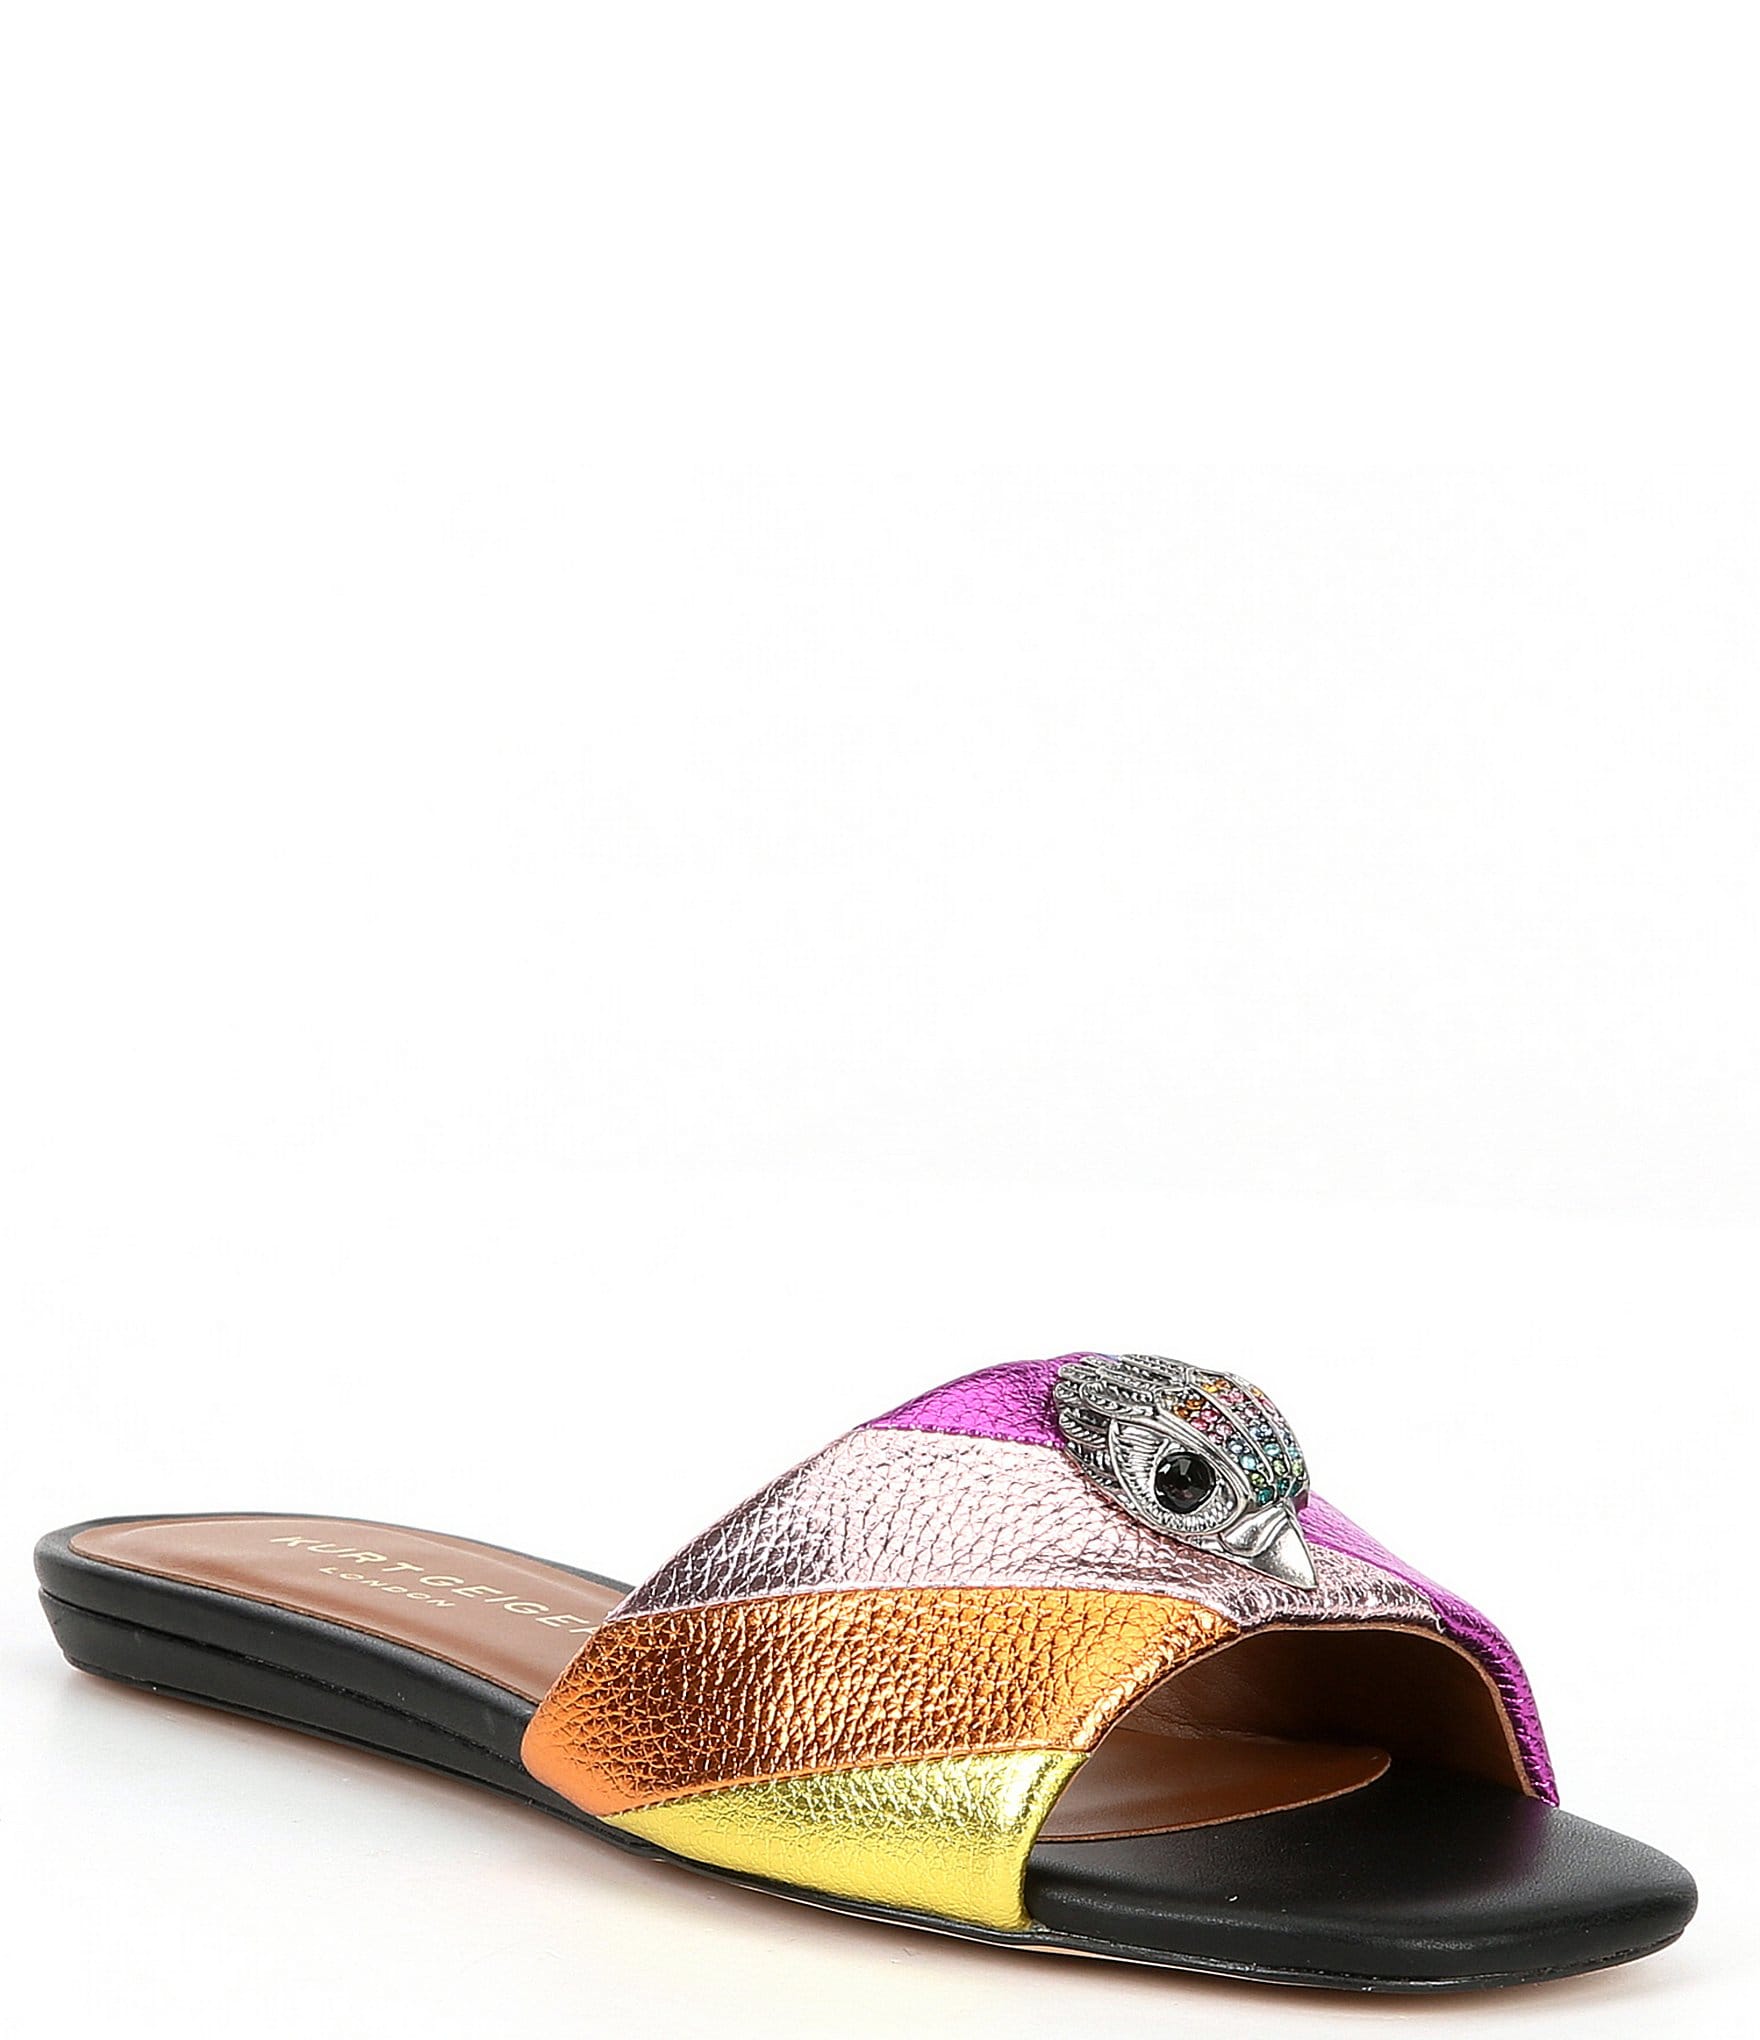 Kurt Geiger London Kensington Metallic Rainbow Slide Sandals | Dillard's